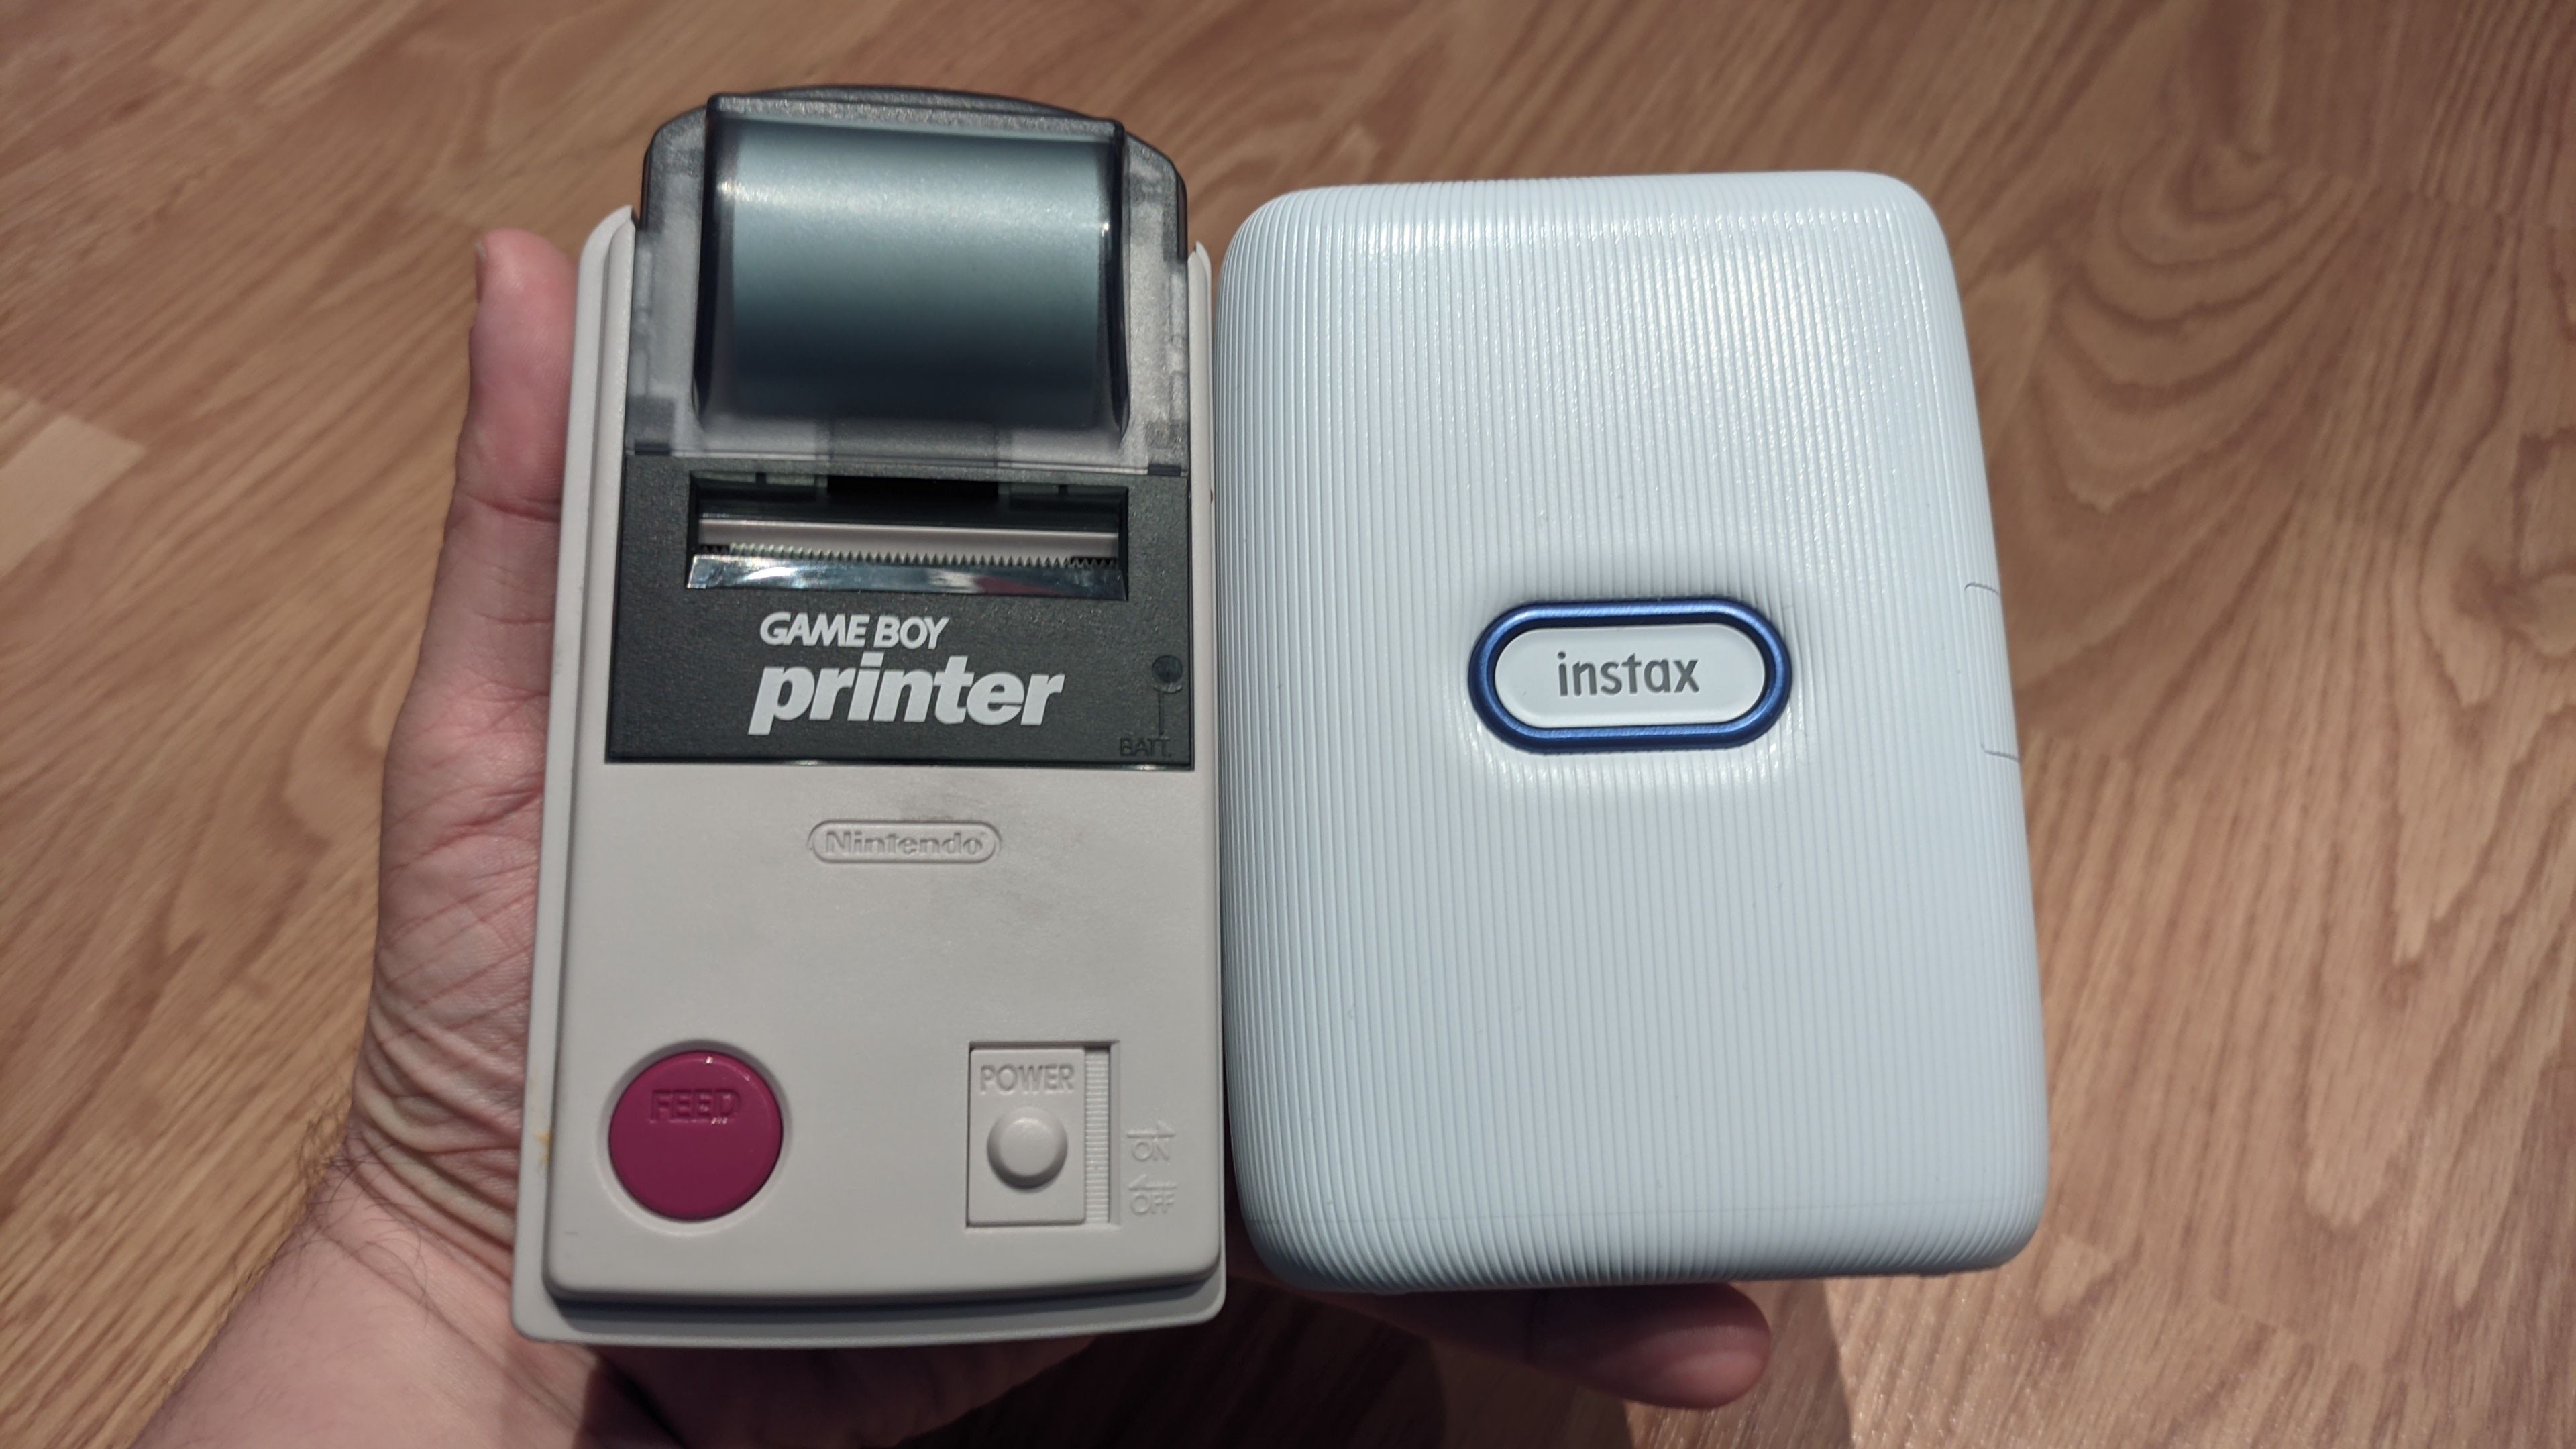 Análisis Instax Mini Link y Game Boy Printer